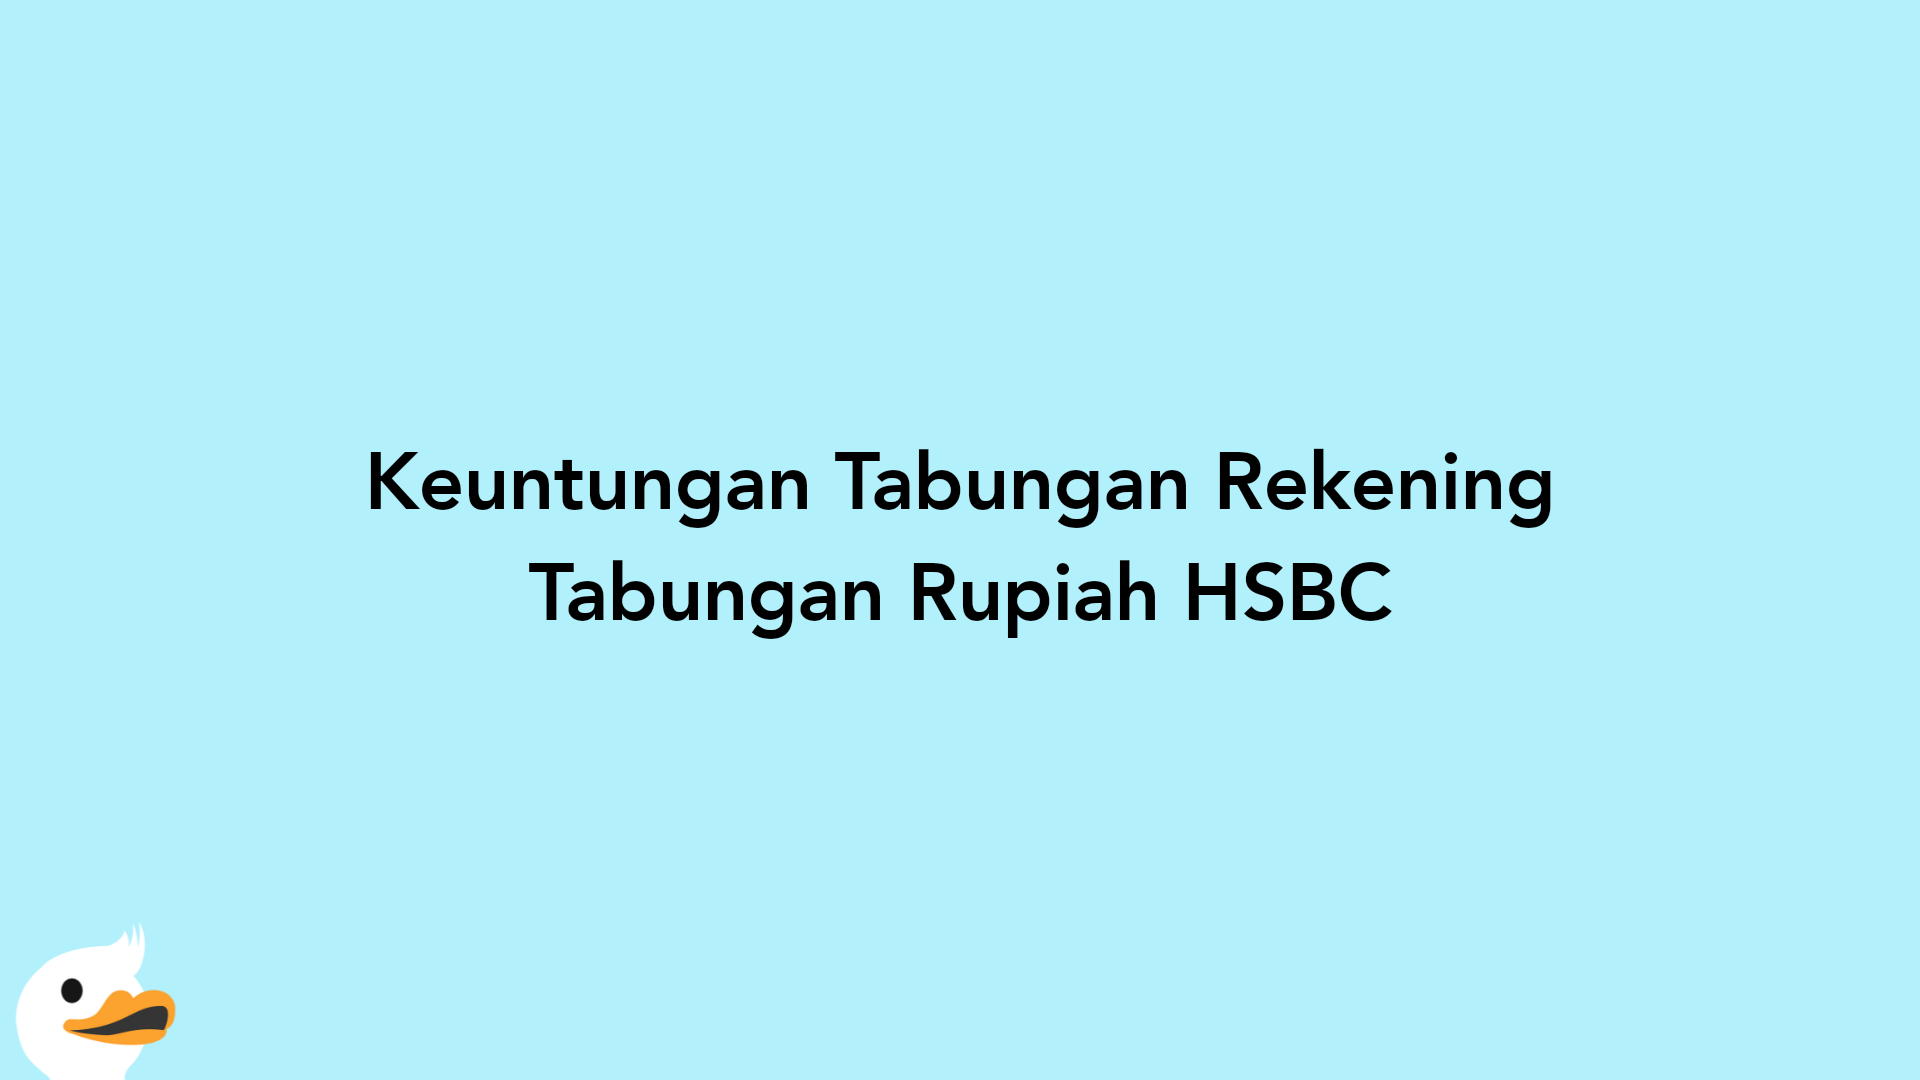 Keuntungan Tabungan Rekening Tabungan Rupiah HSBC